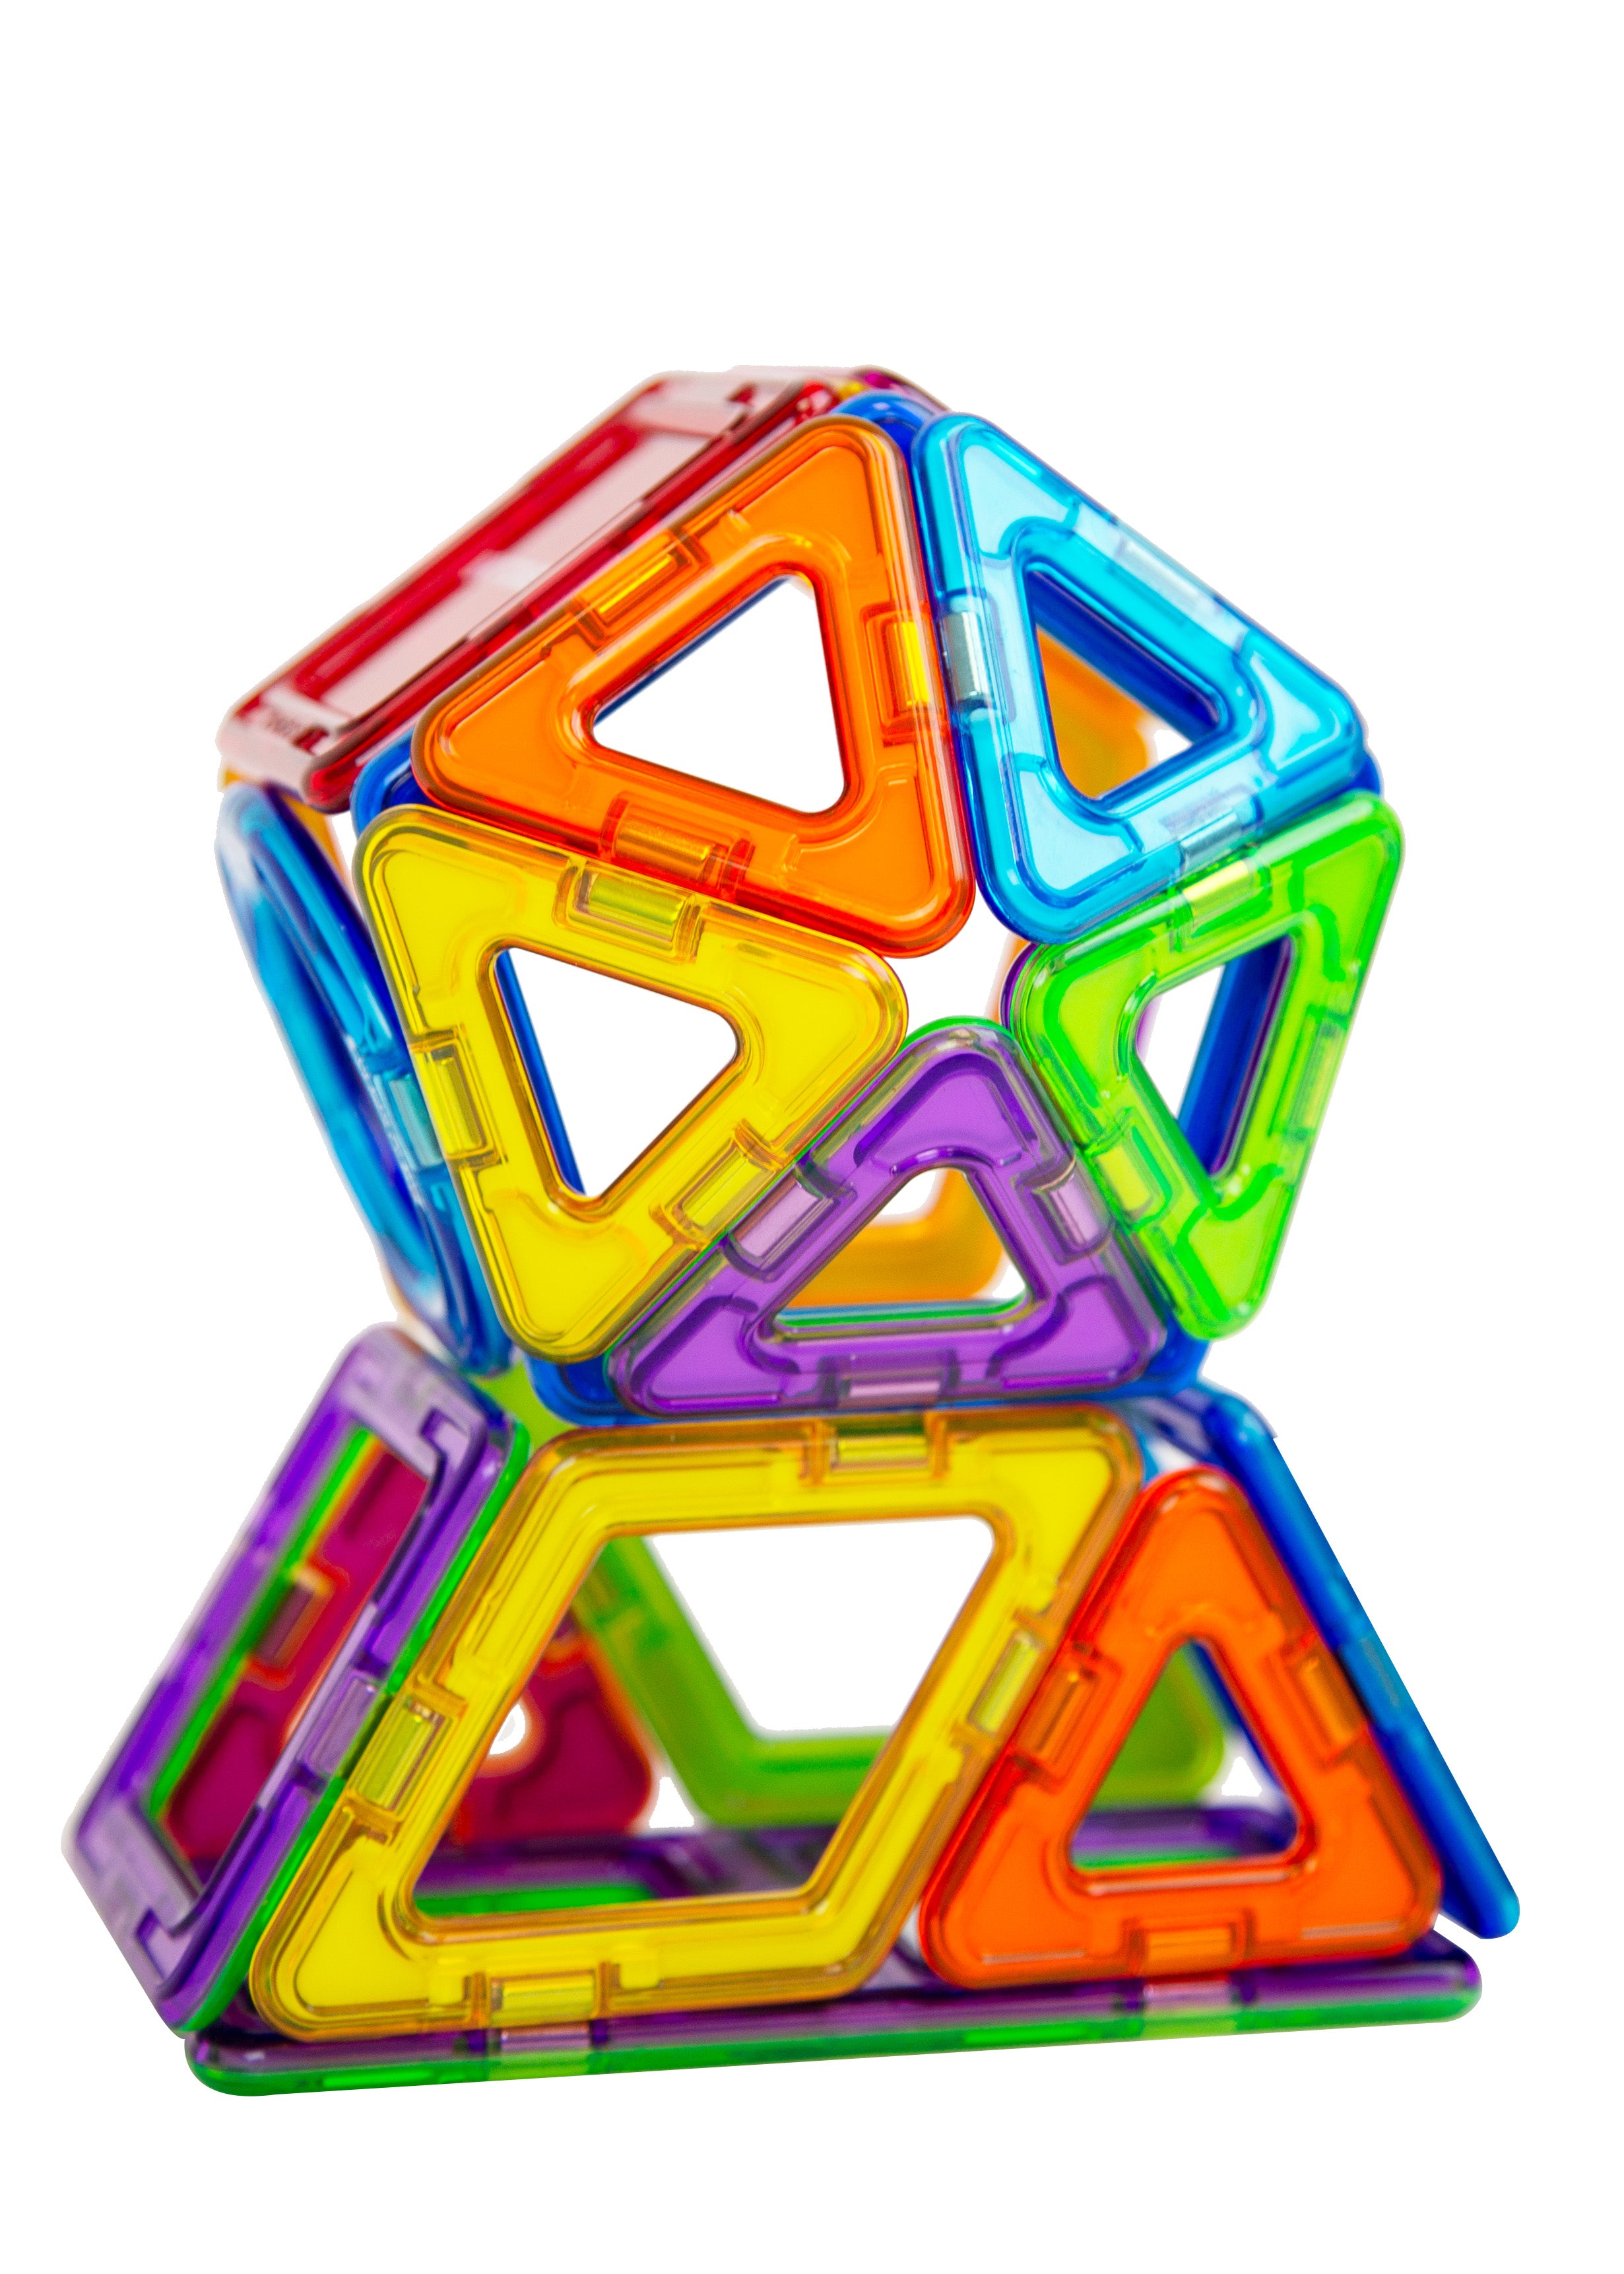 54 Magnetic Shapes - Creating Unusual Sculptures - STEM